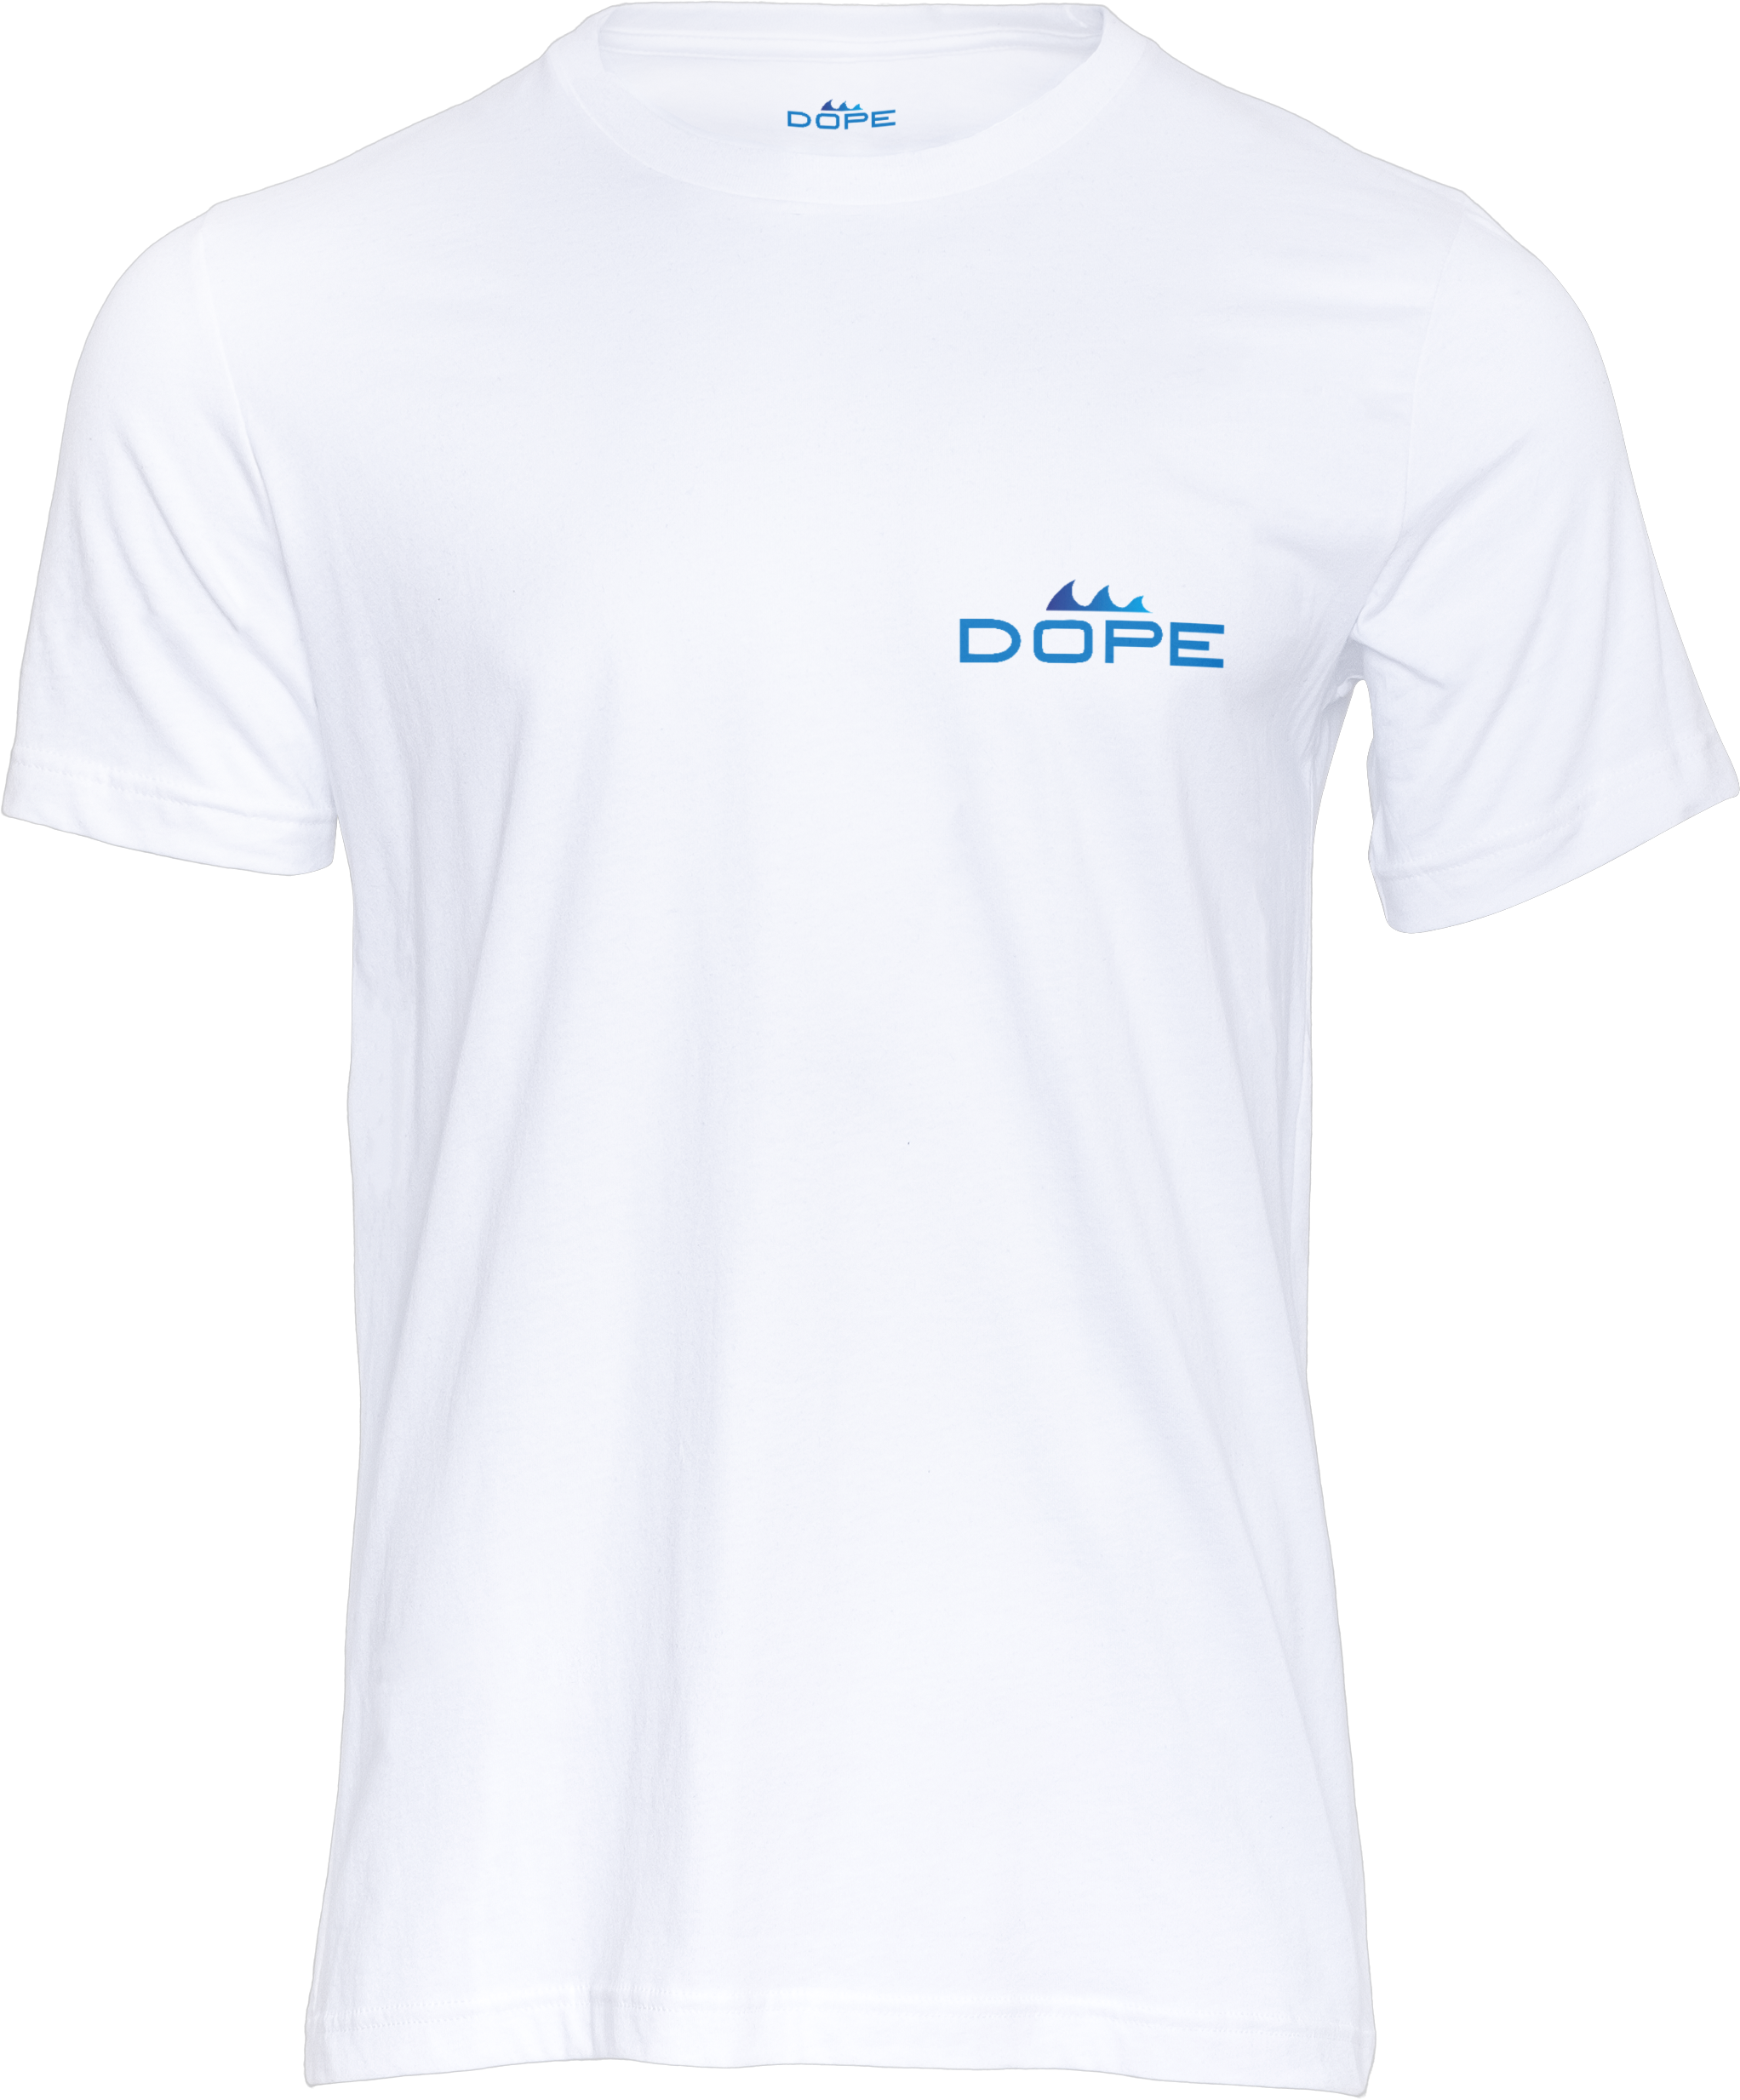 CWT- Cotton T-Shirt